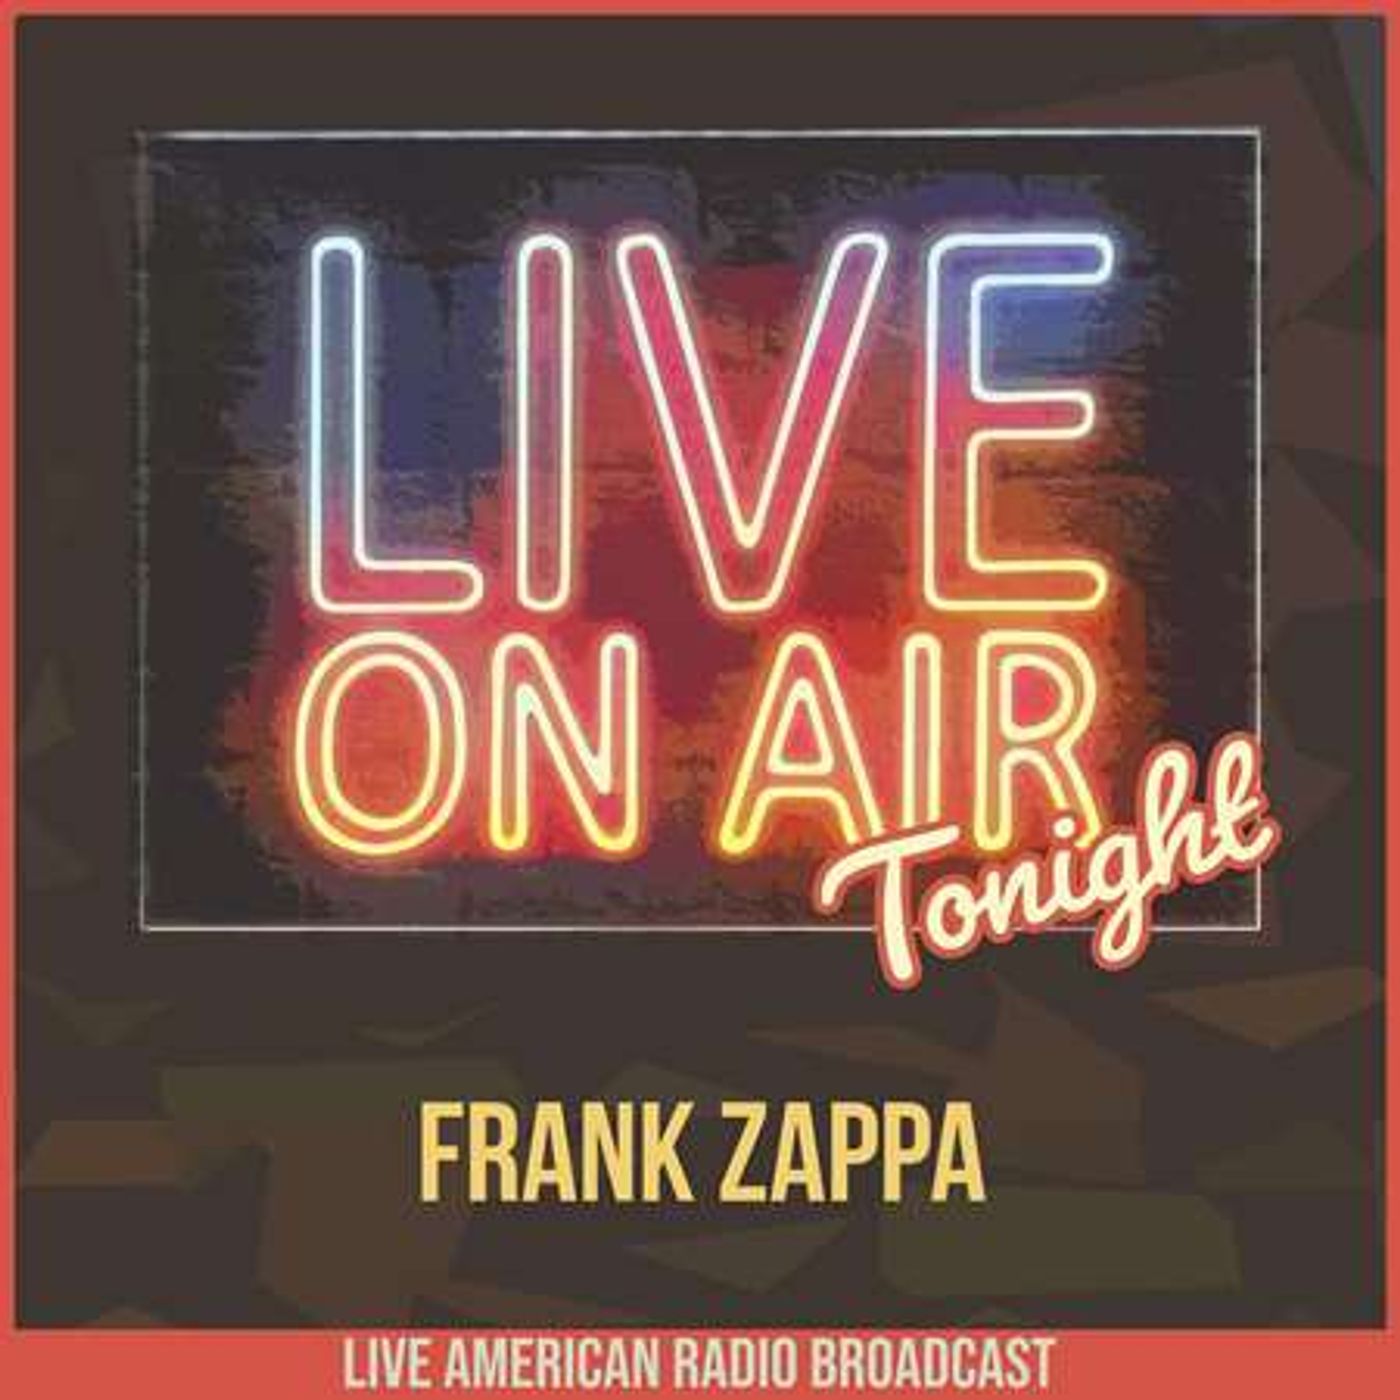 atualizando a minha playlist - ep 111 - Frank Zappa Live On Air Tonight